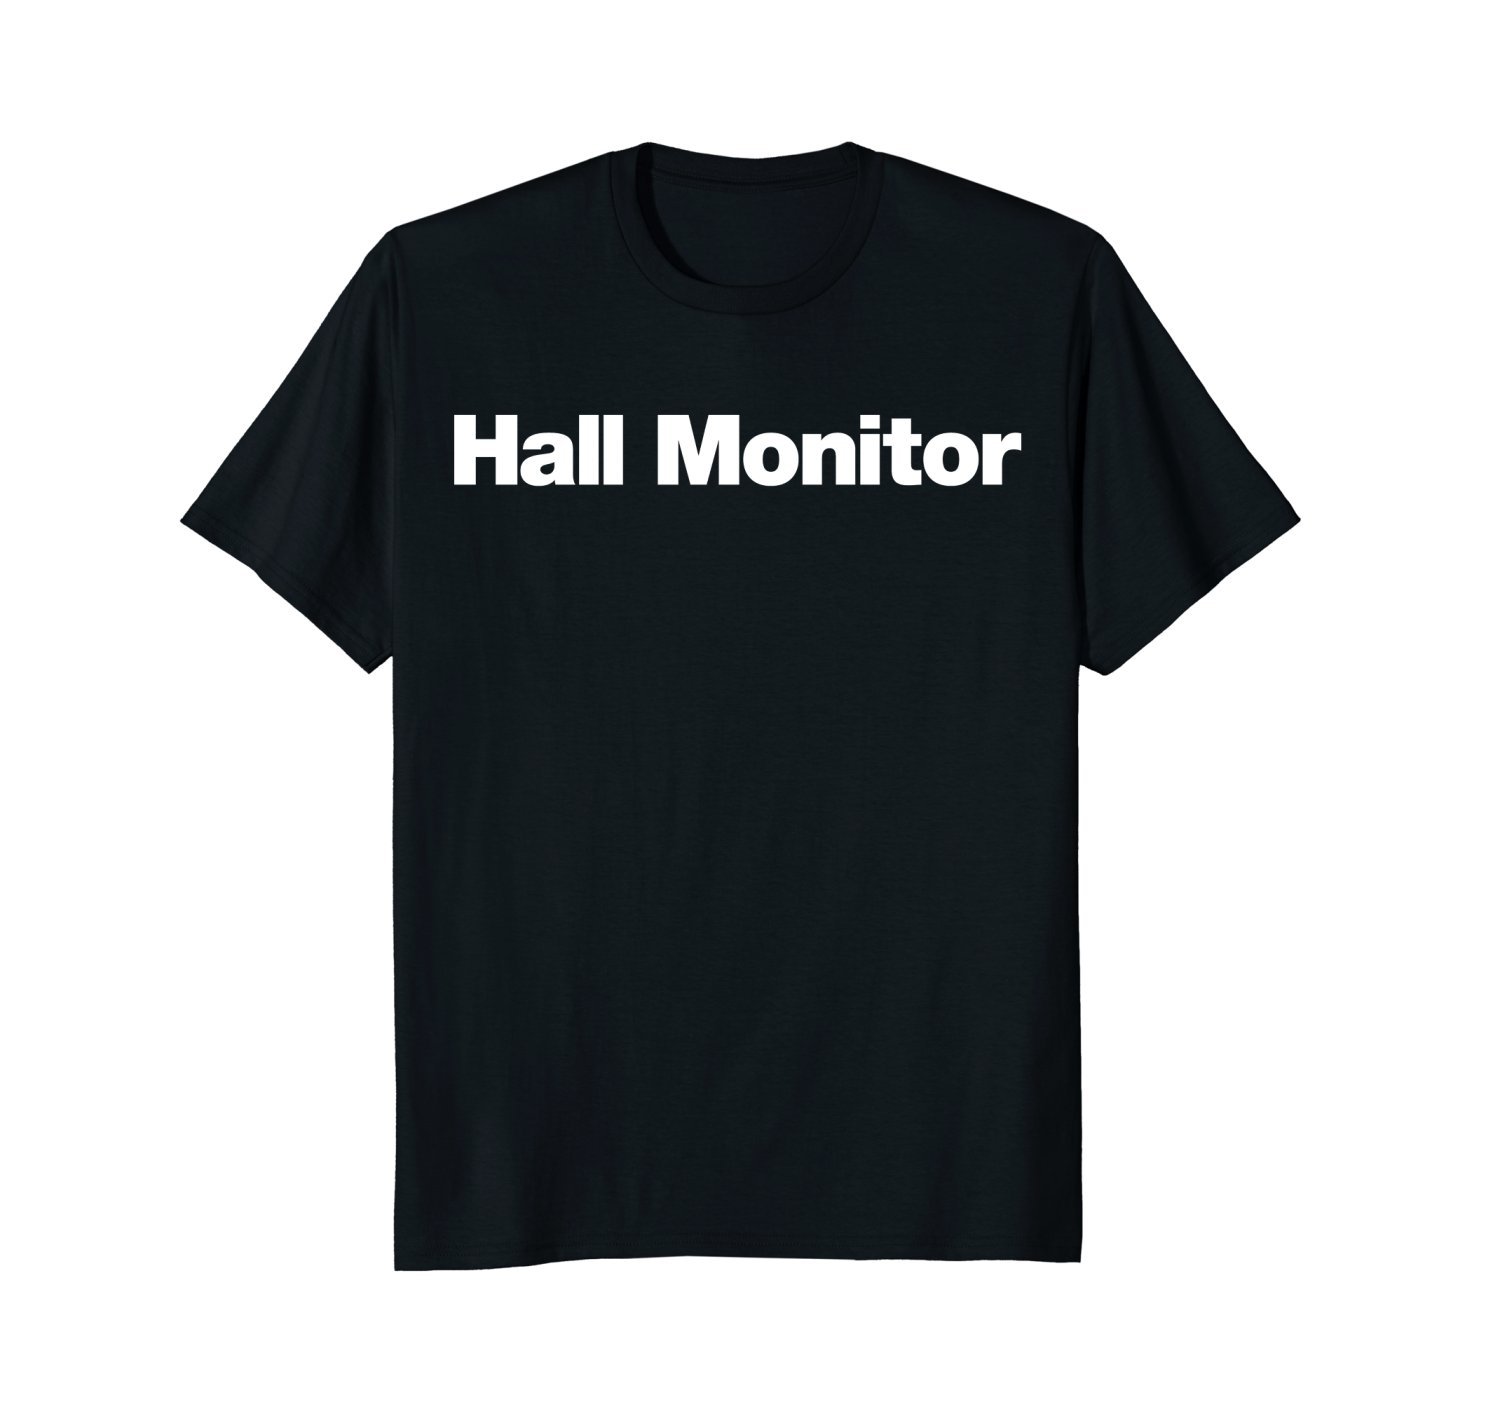 Hall Monitor - A shirt that says Hall Monitor